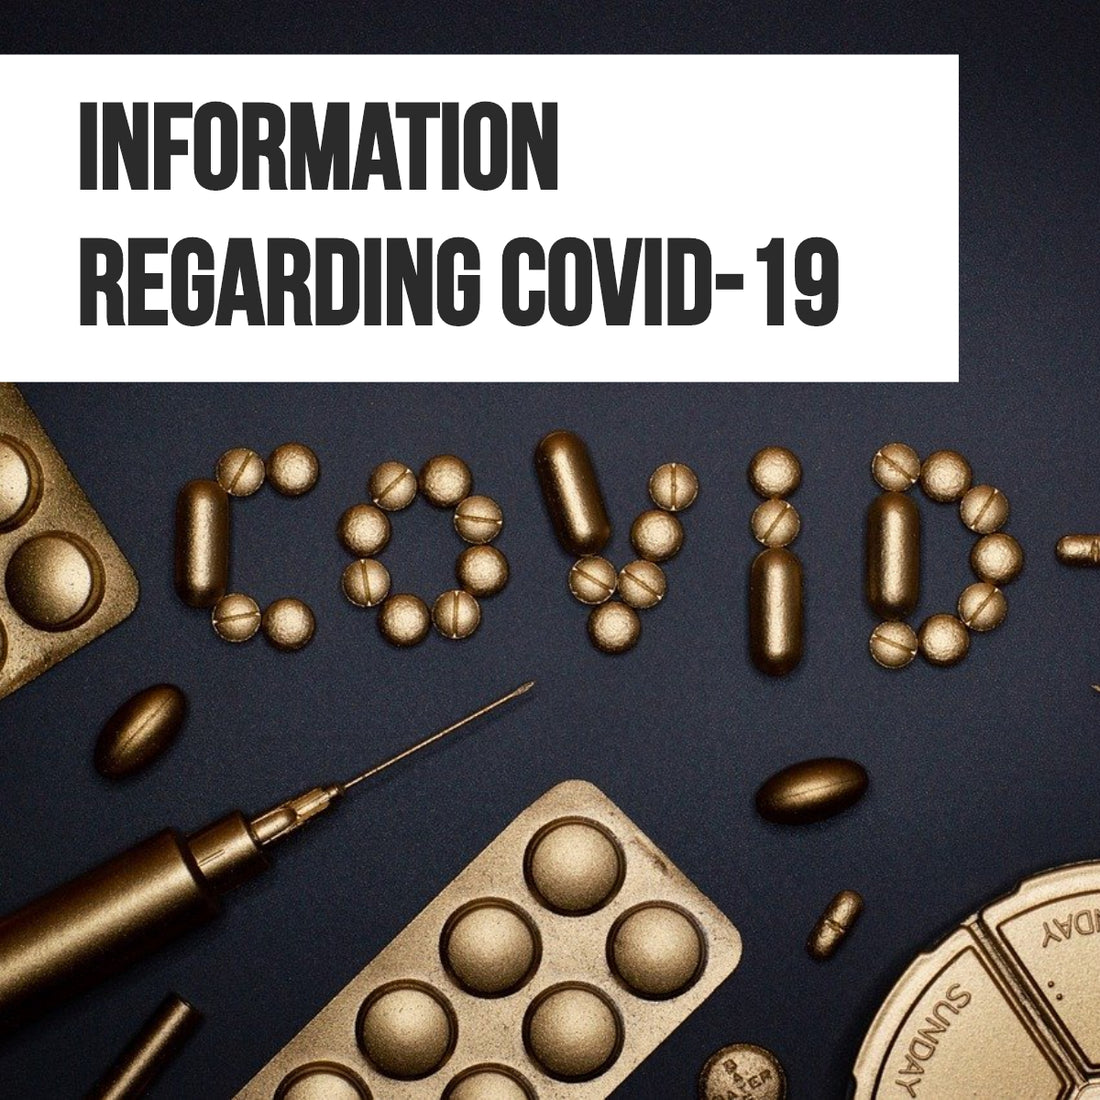 Information regarding COVID-19